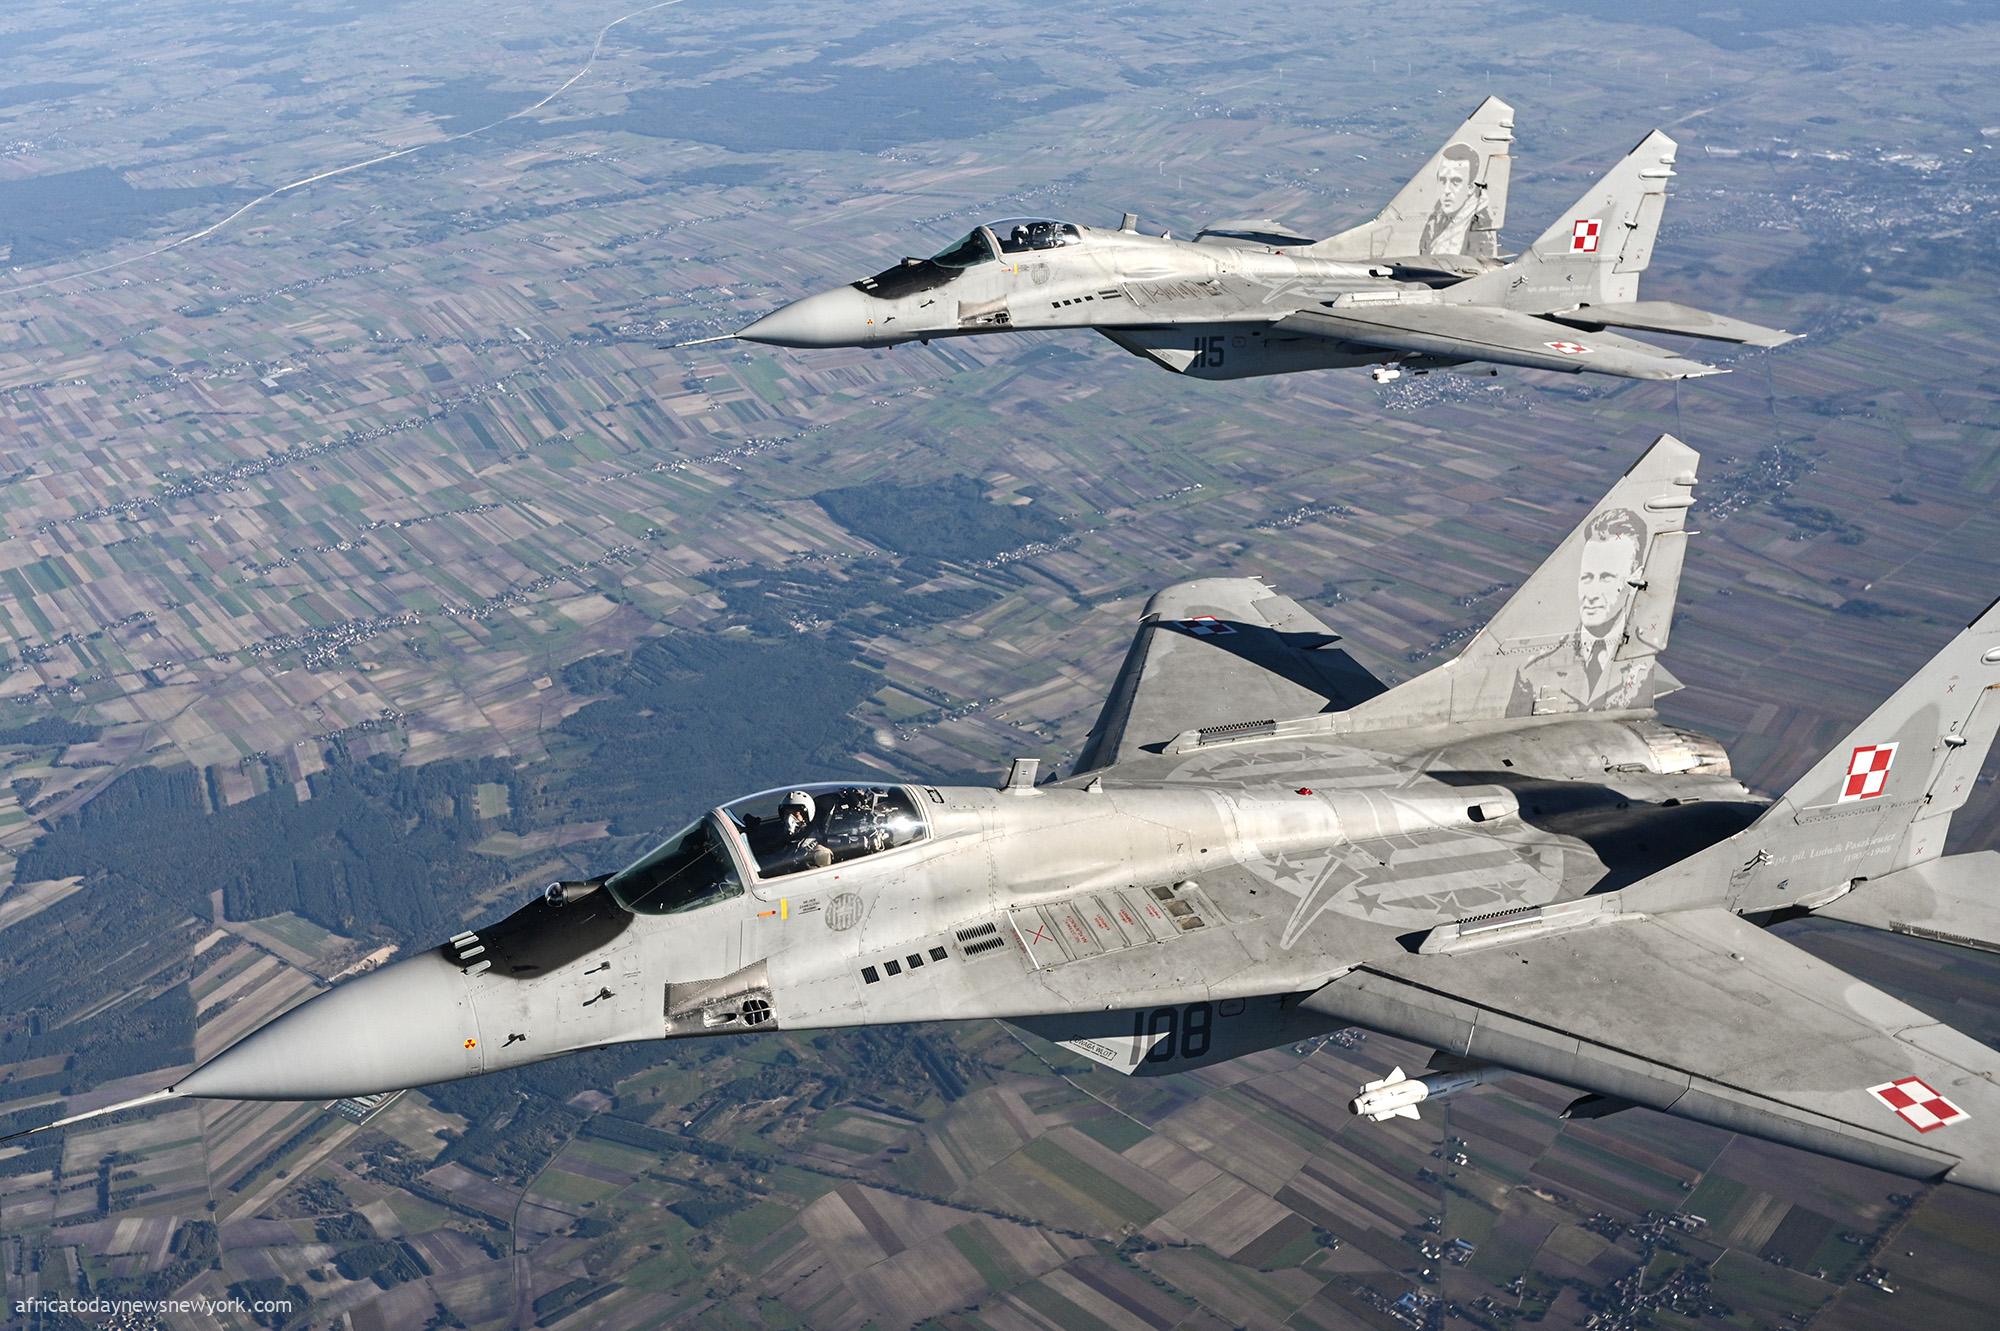 Germany Okays Request To Send MiG-29 Jets To Ukraine